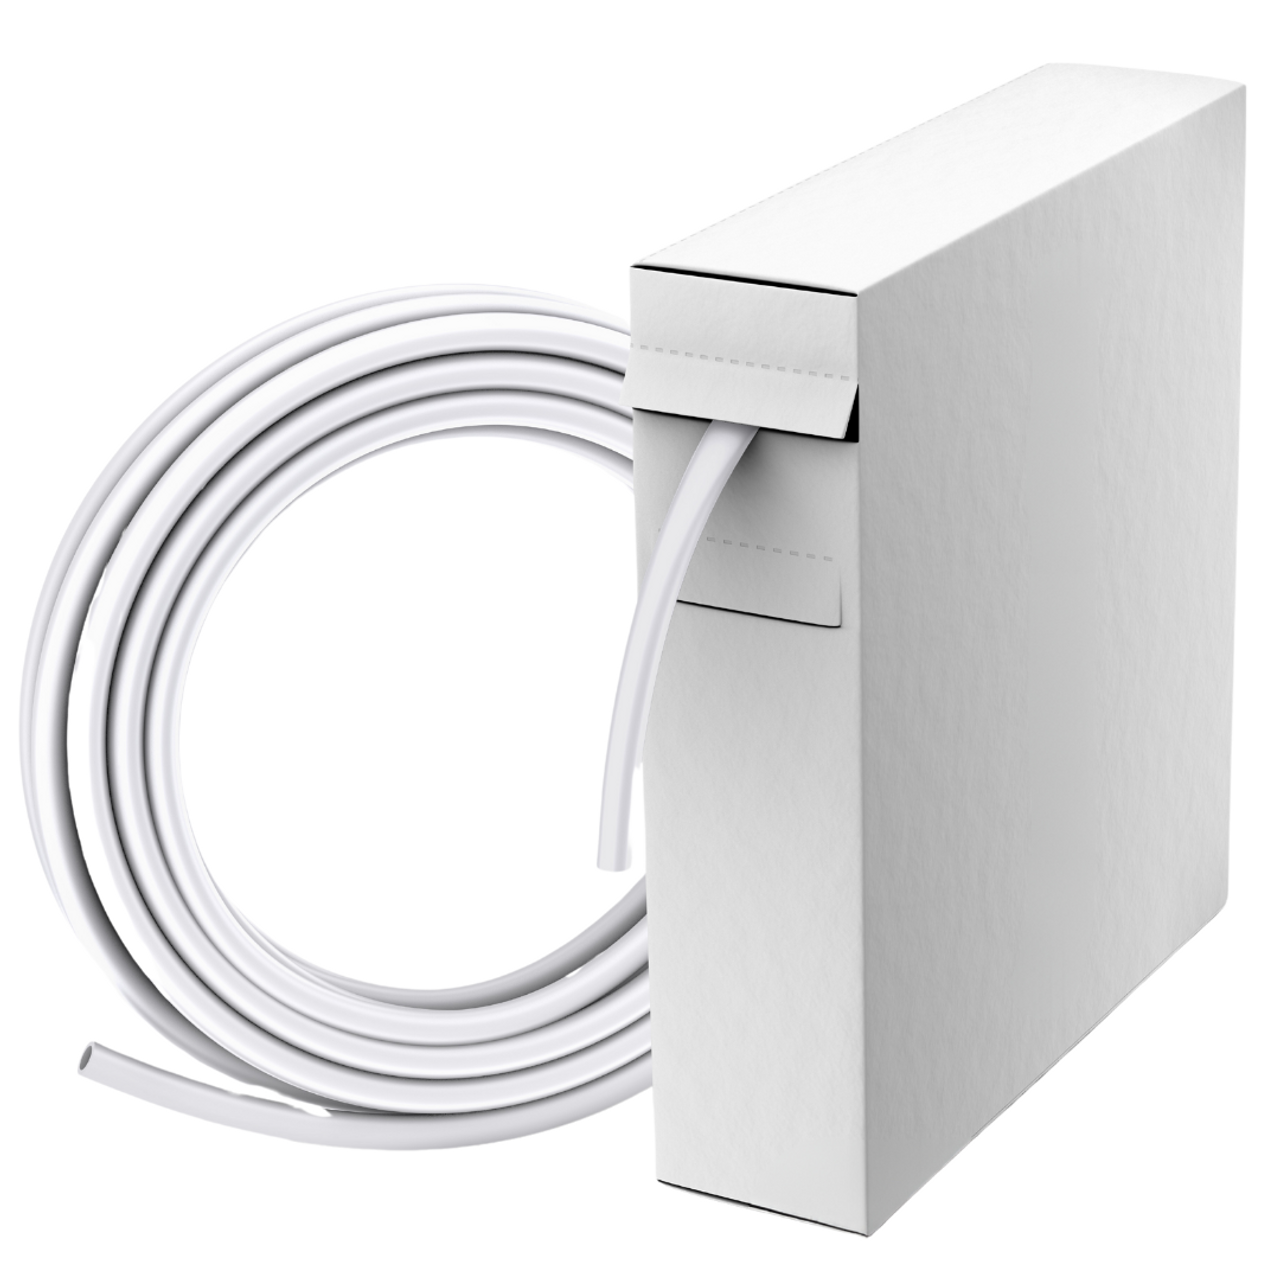 White 2:1 Heat Shrink Tubing Mini Reel Box, Buy Cable Sleeving